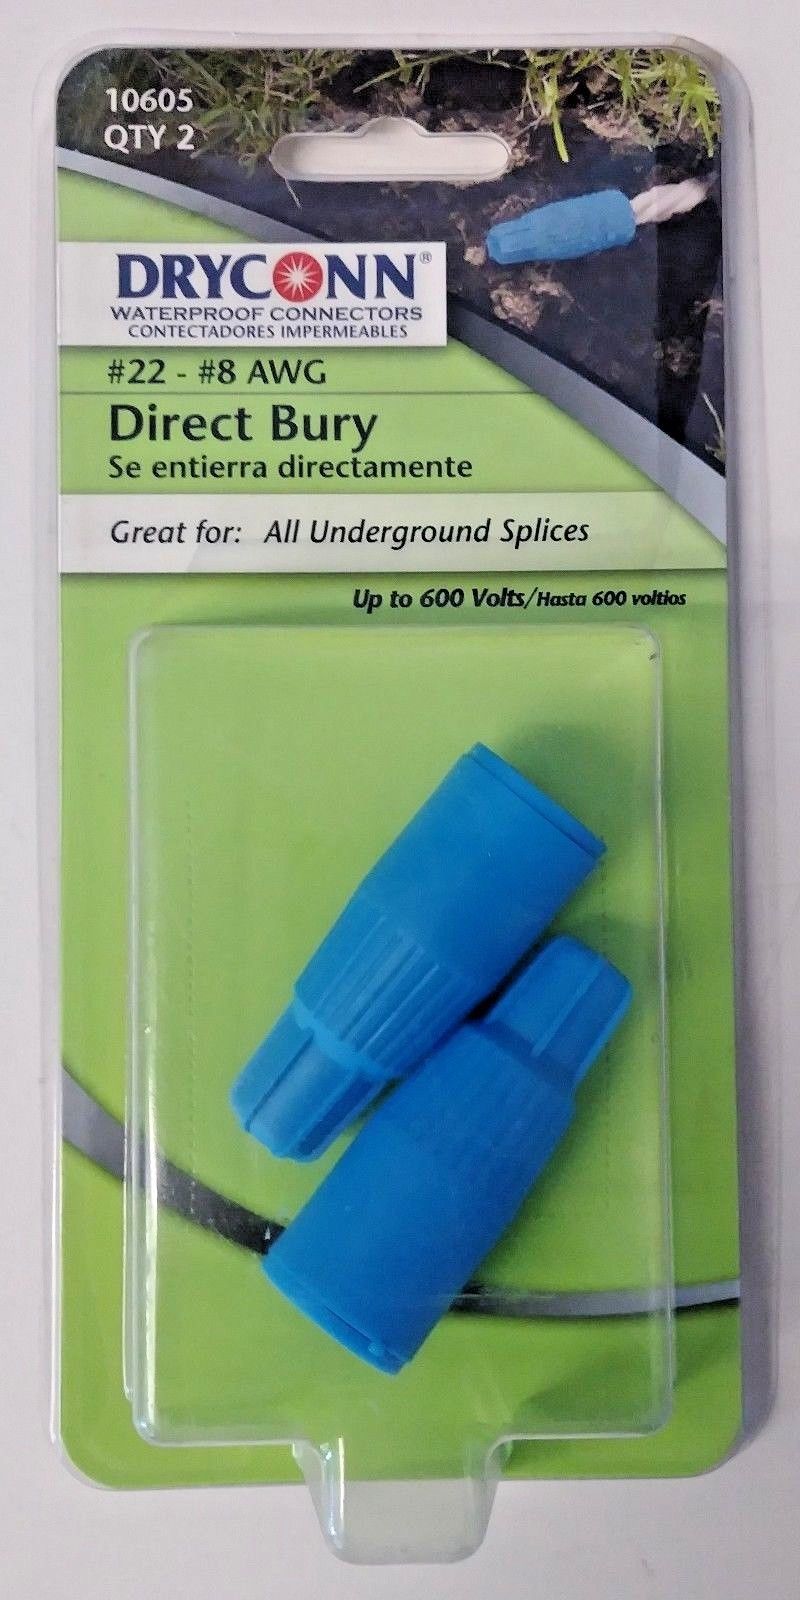 Dryconn 10605 #22 - #8 AWG Direct Bury 2 Pack USA